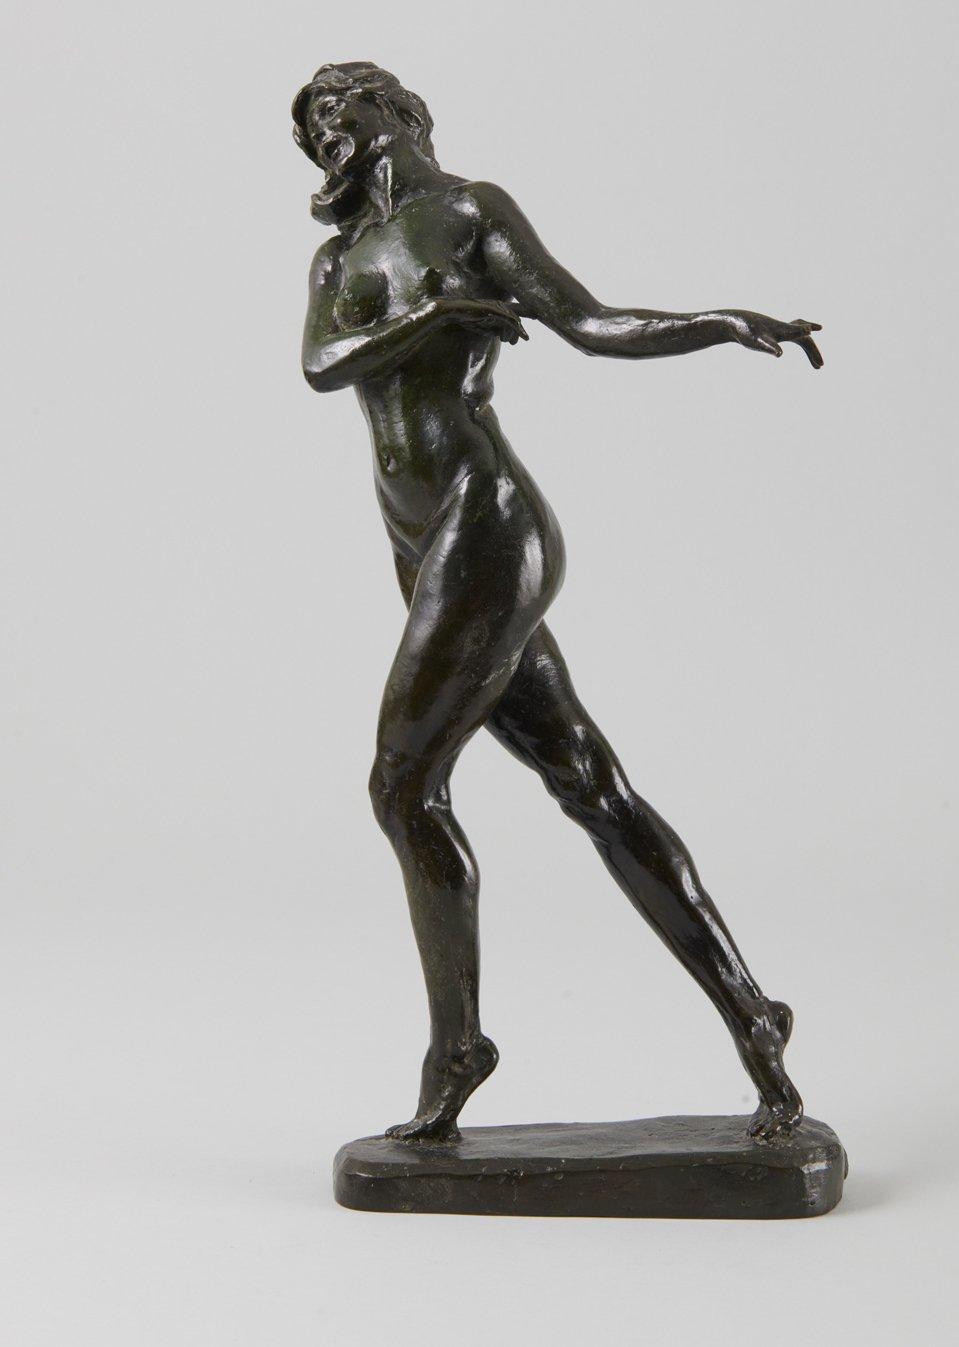 Max Kalish Figurative Sculpture - Nude Walking, Early 20th Century Bronze Sculpture, Cleveland School Artist